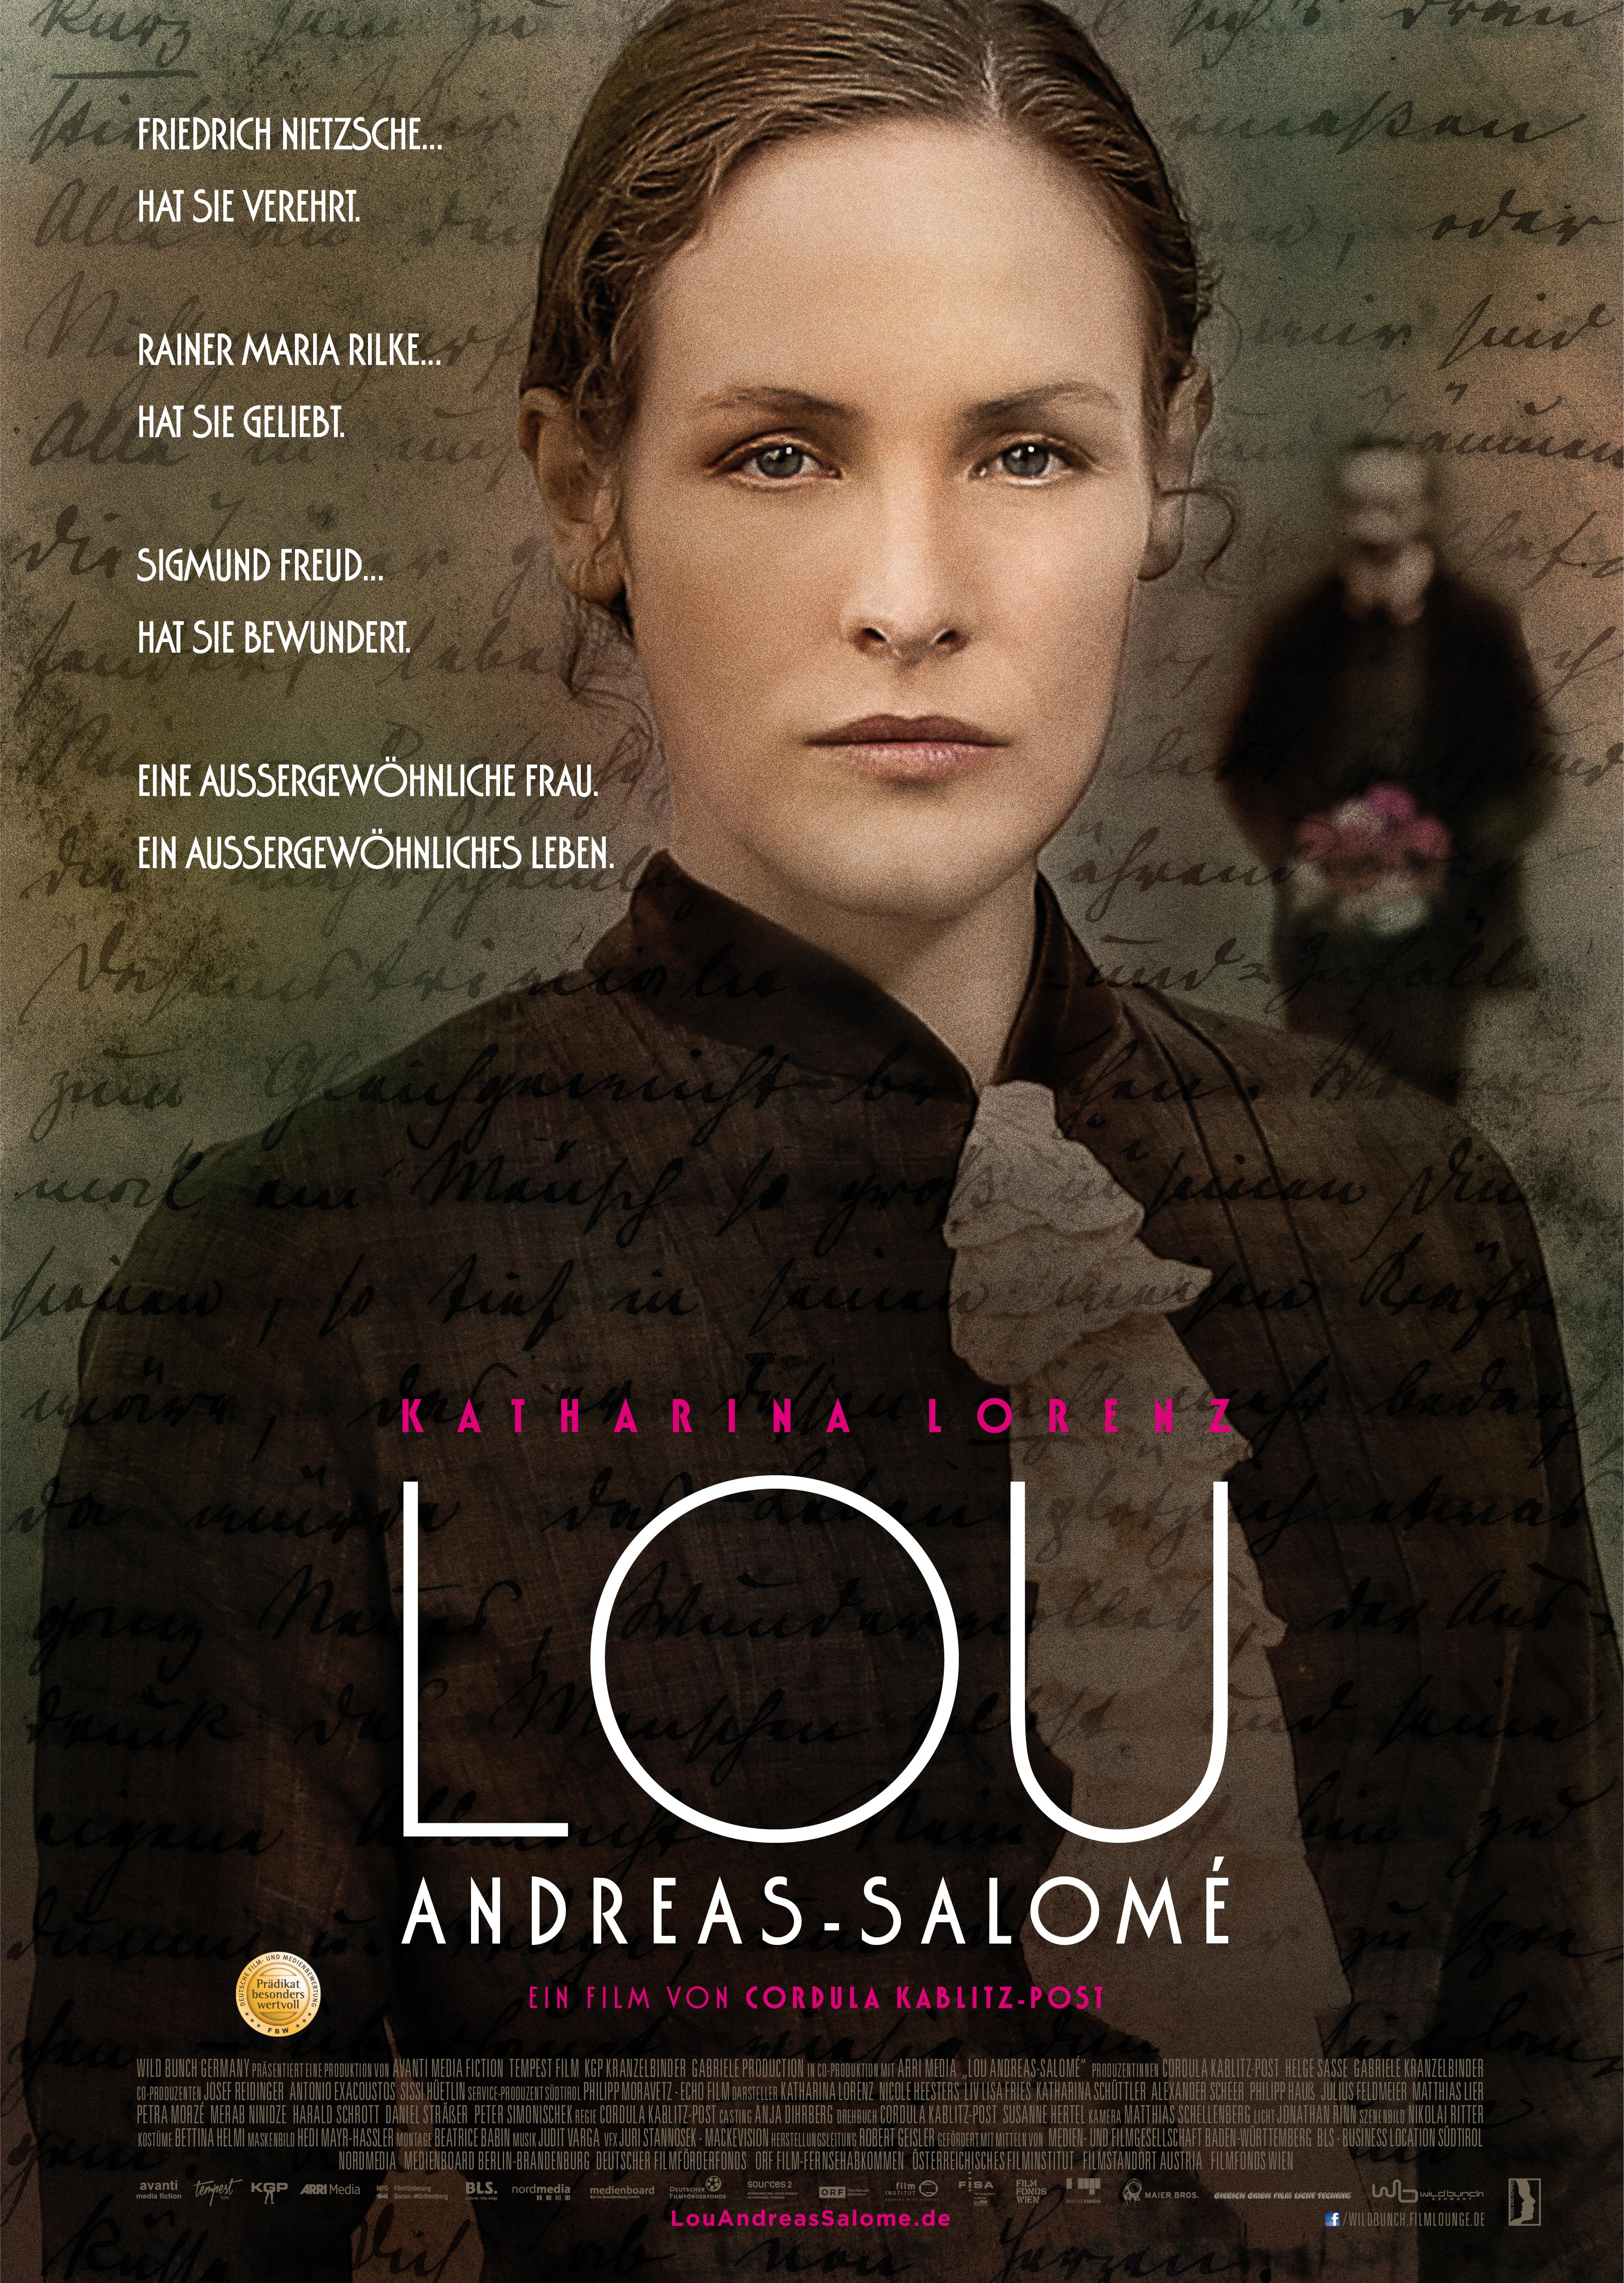 Lou Andreas-Salomé Blu-ray